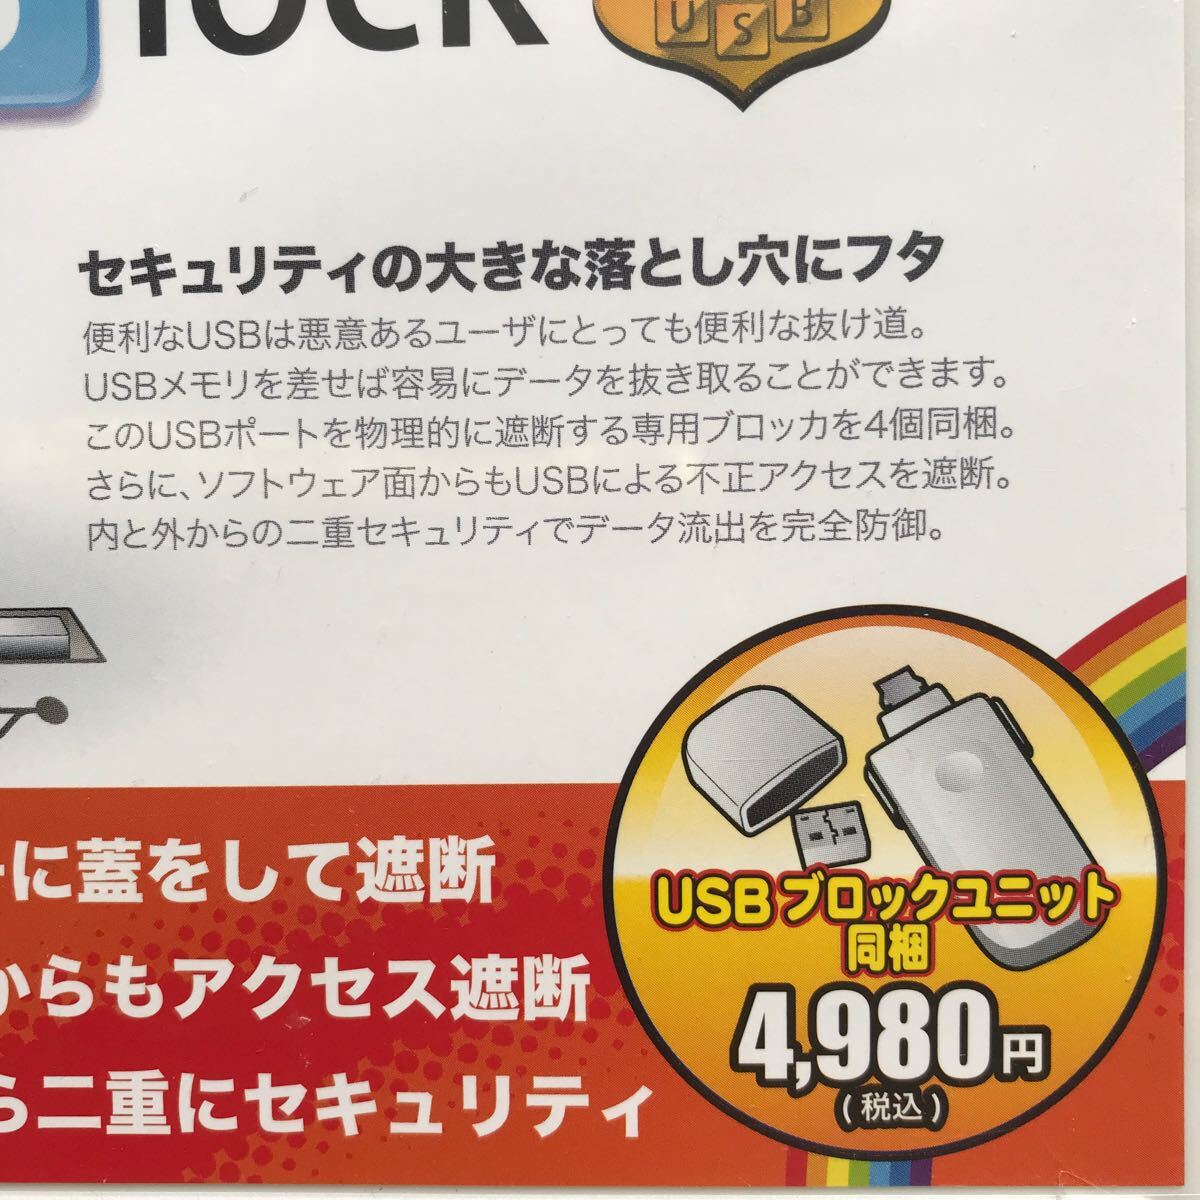 Ultimate Security Block Ultimate * security * block WindowsVista/XP/2000 Japanese 32bit version USB block unit including in a package 